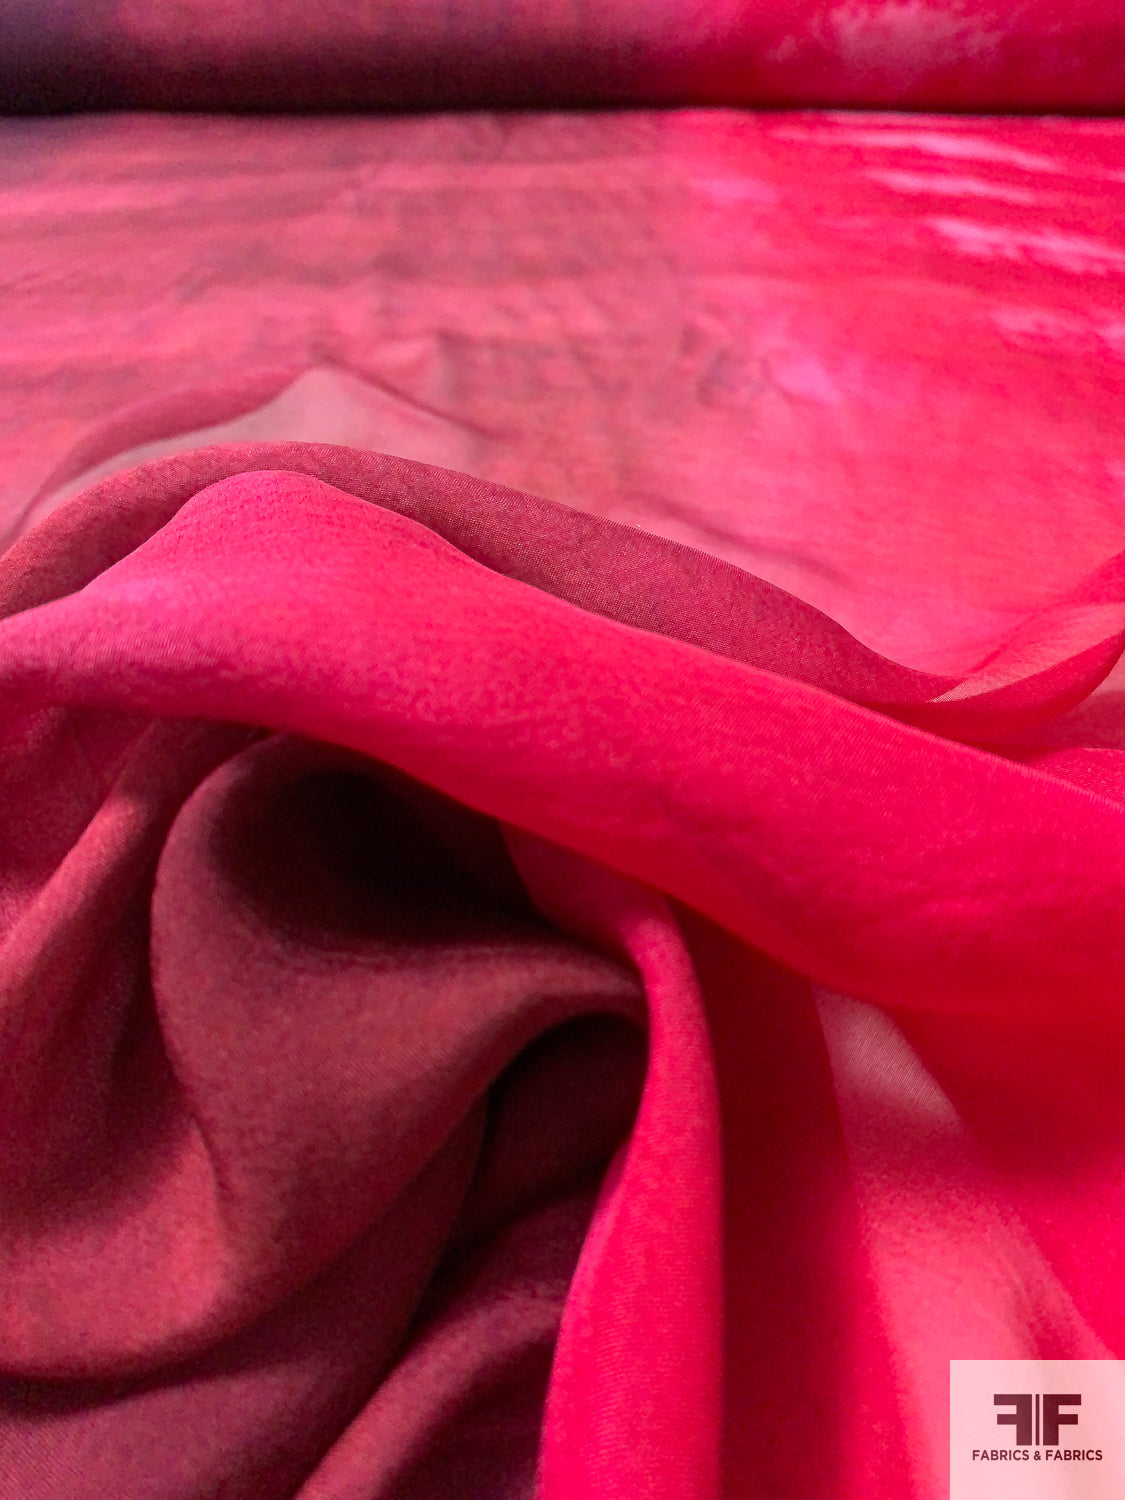 French Ombré Tie-Dye Printed Silk Chiffon - Strawberry Red / Burgundy / Eggplant